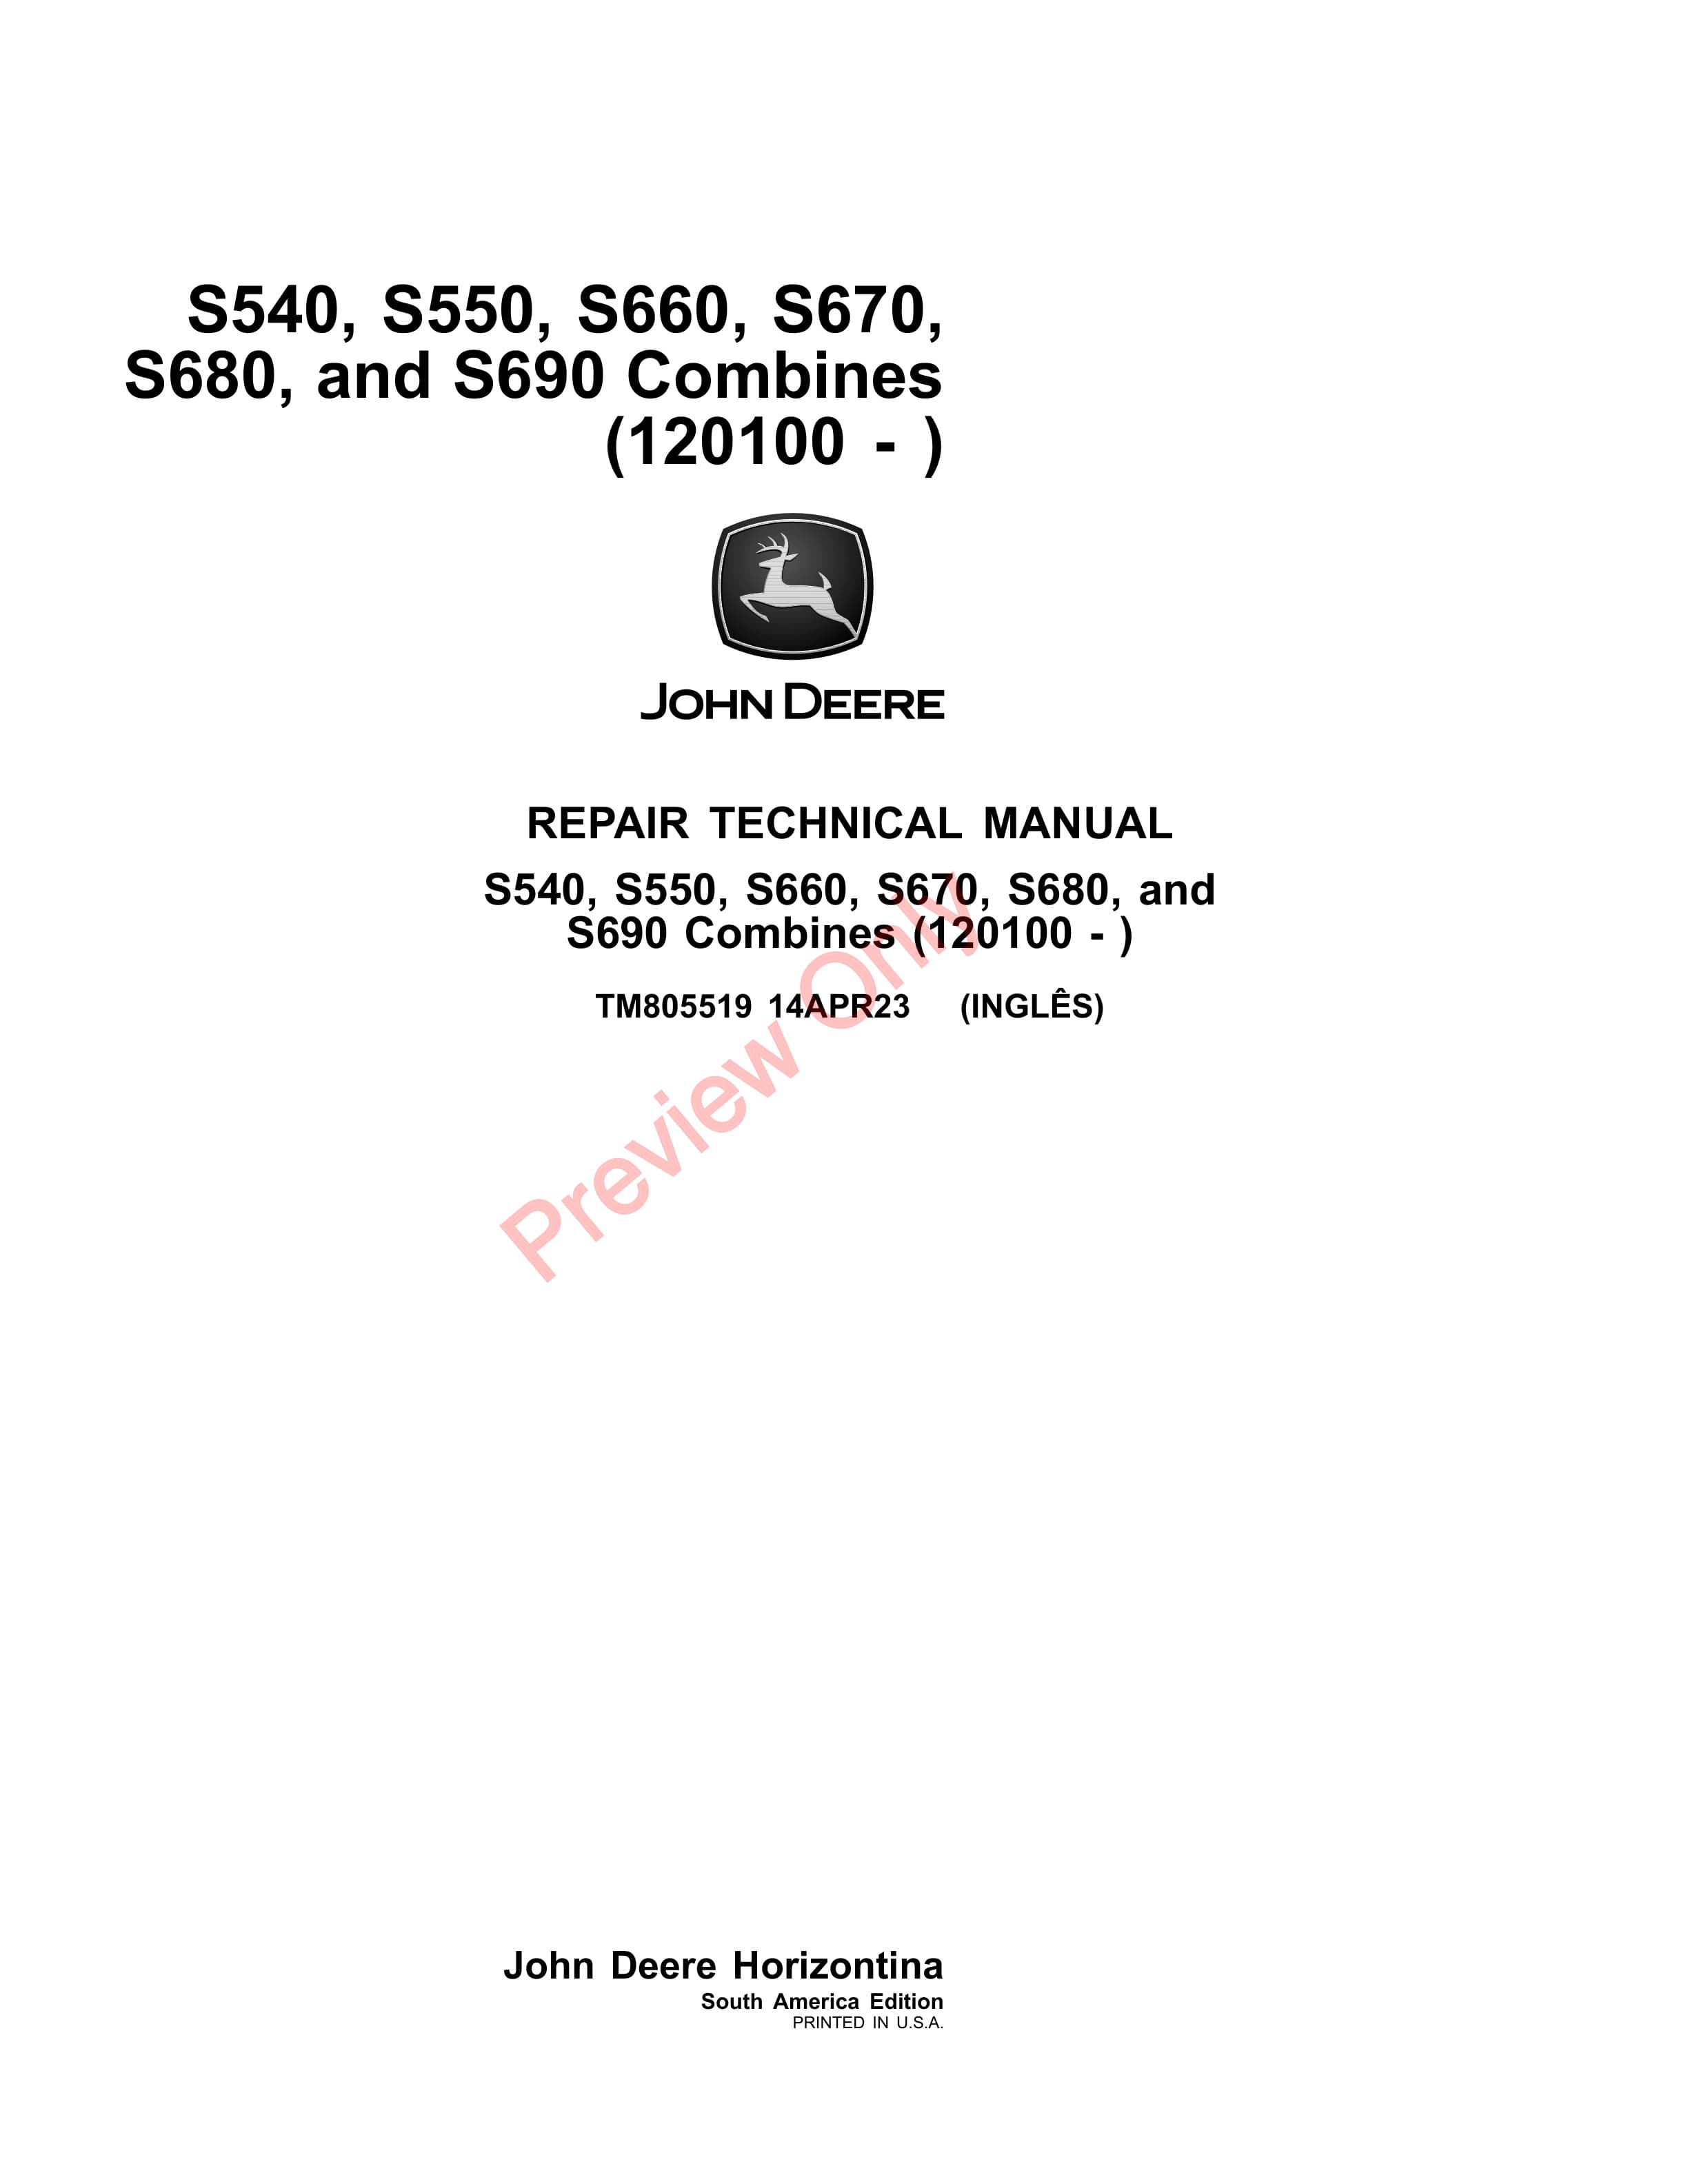 John Deere S540 S550 S660 S670 S680 and S690 Combines 120100 Repair Technical Manual TM805519 14APR23 1